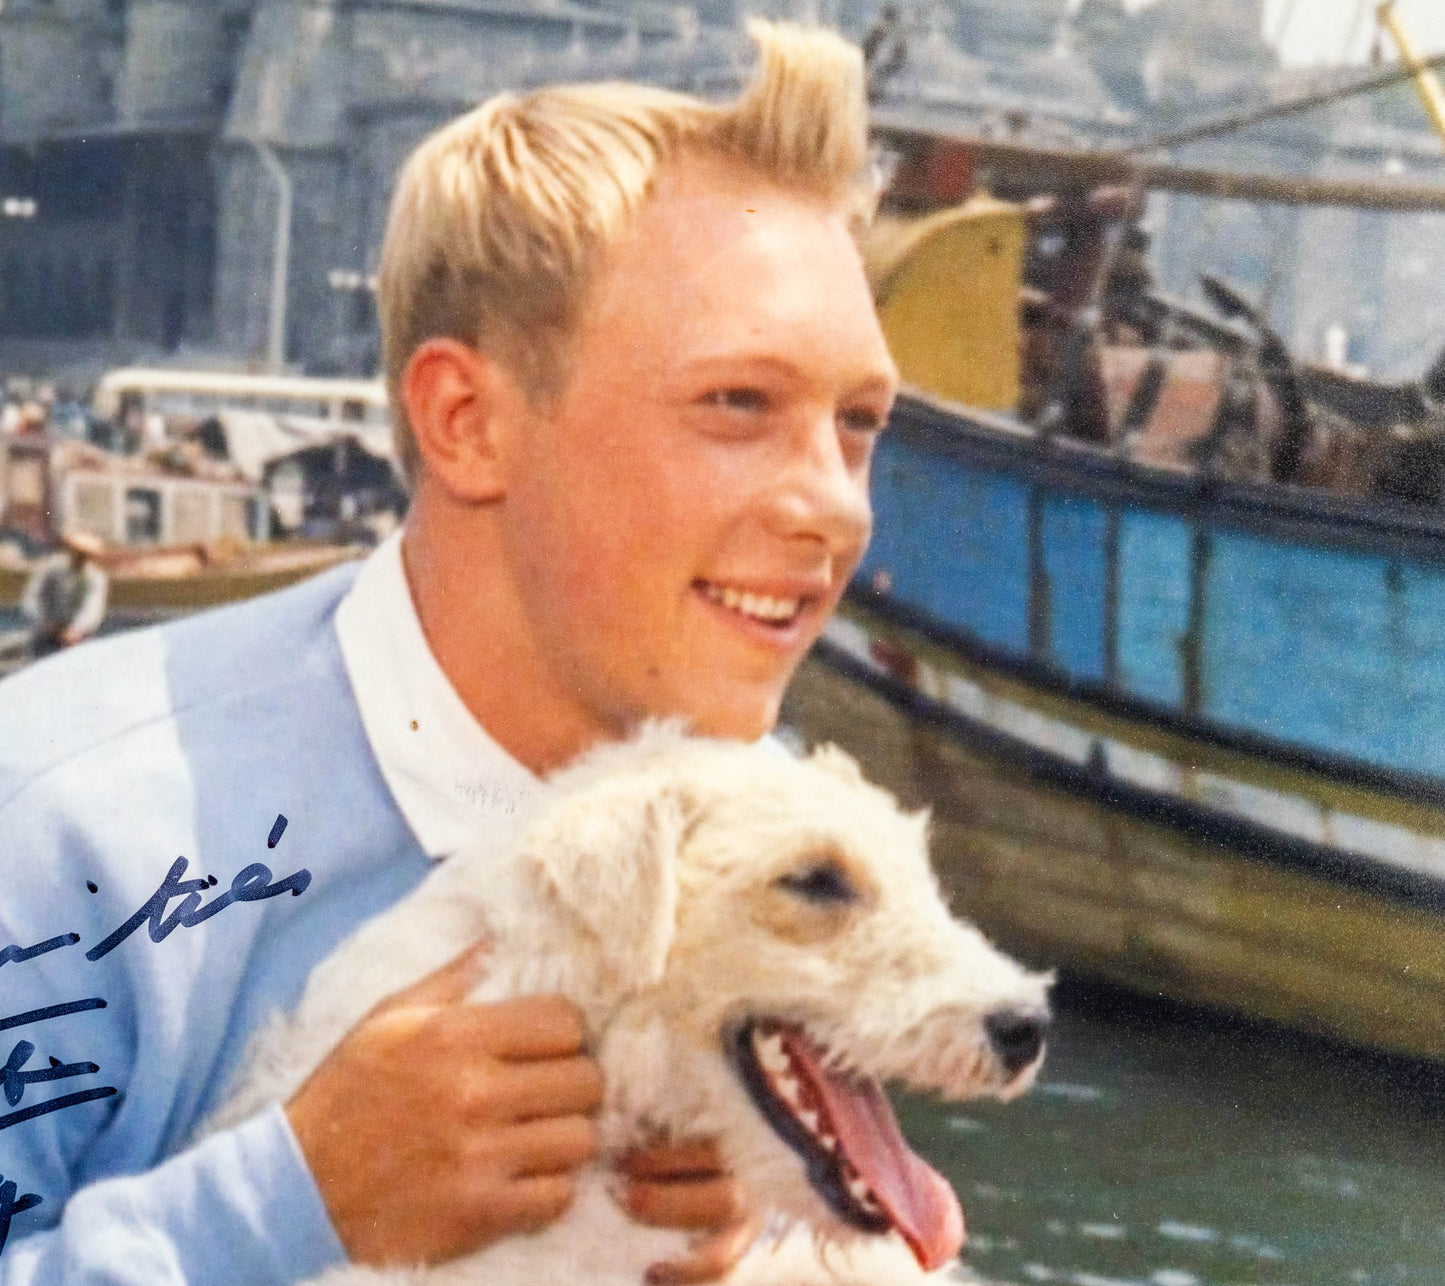 1965 Signed Photo of Jean-Pierre Talbot: Actor of Tintin Golden Fleece 100% Original